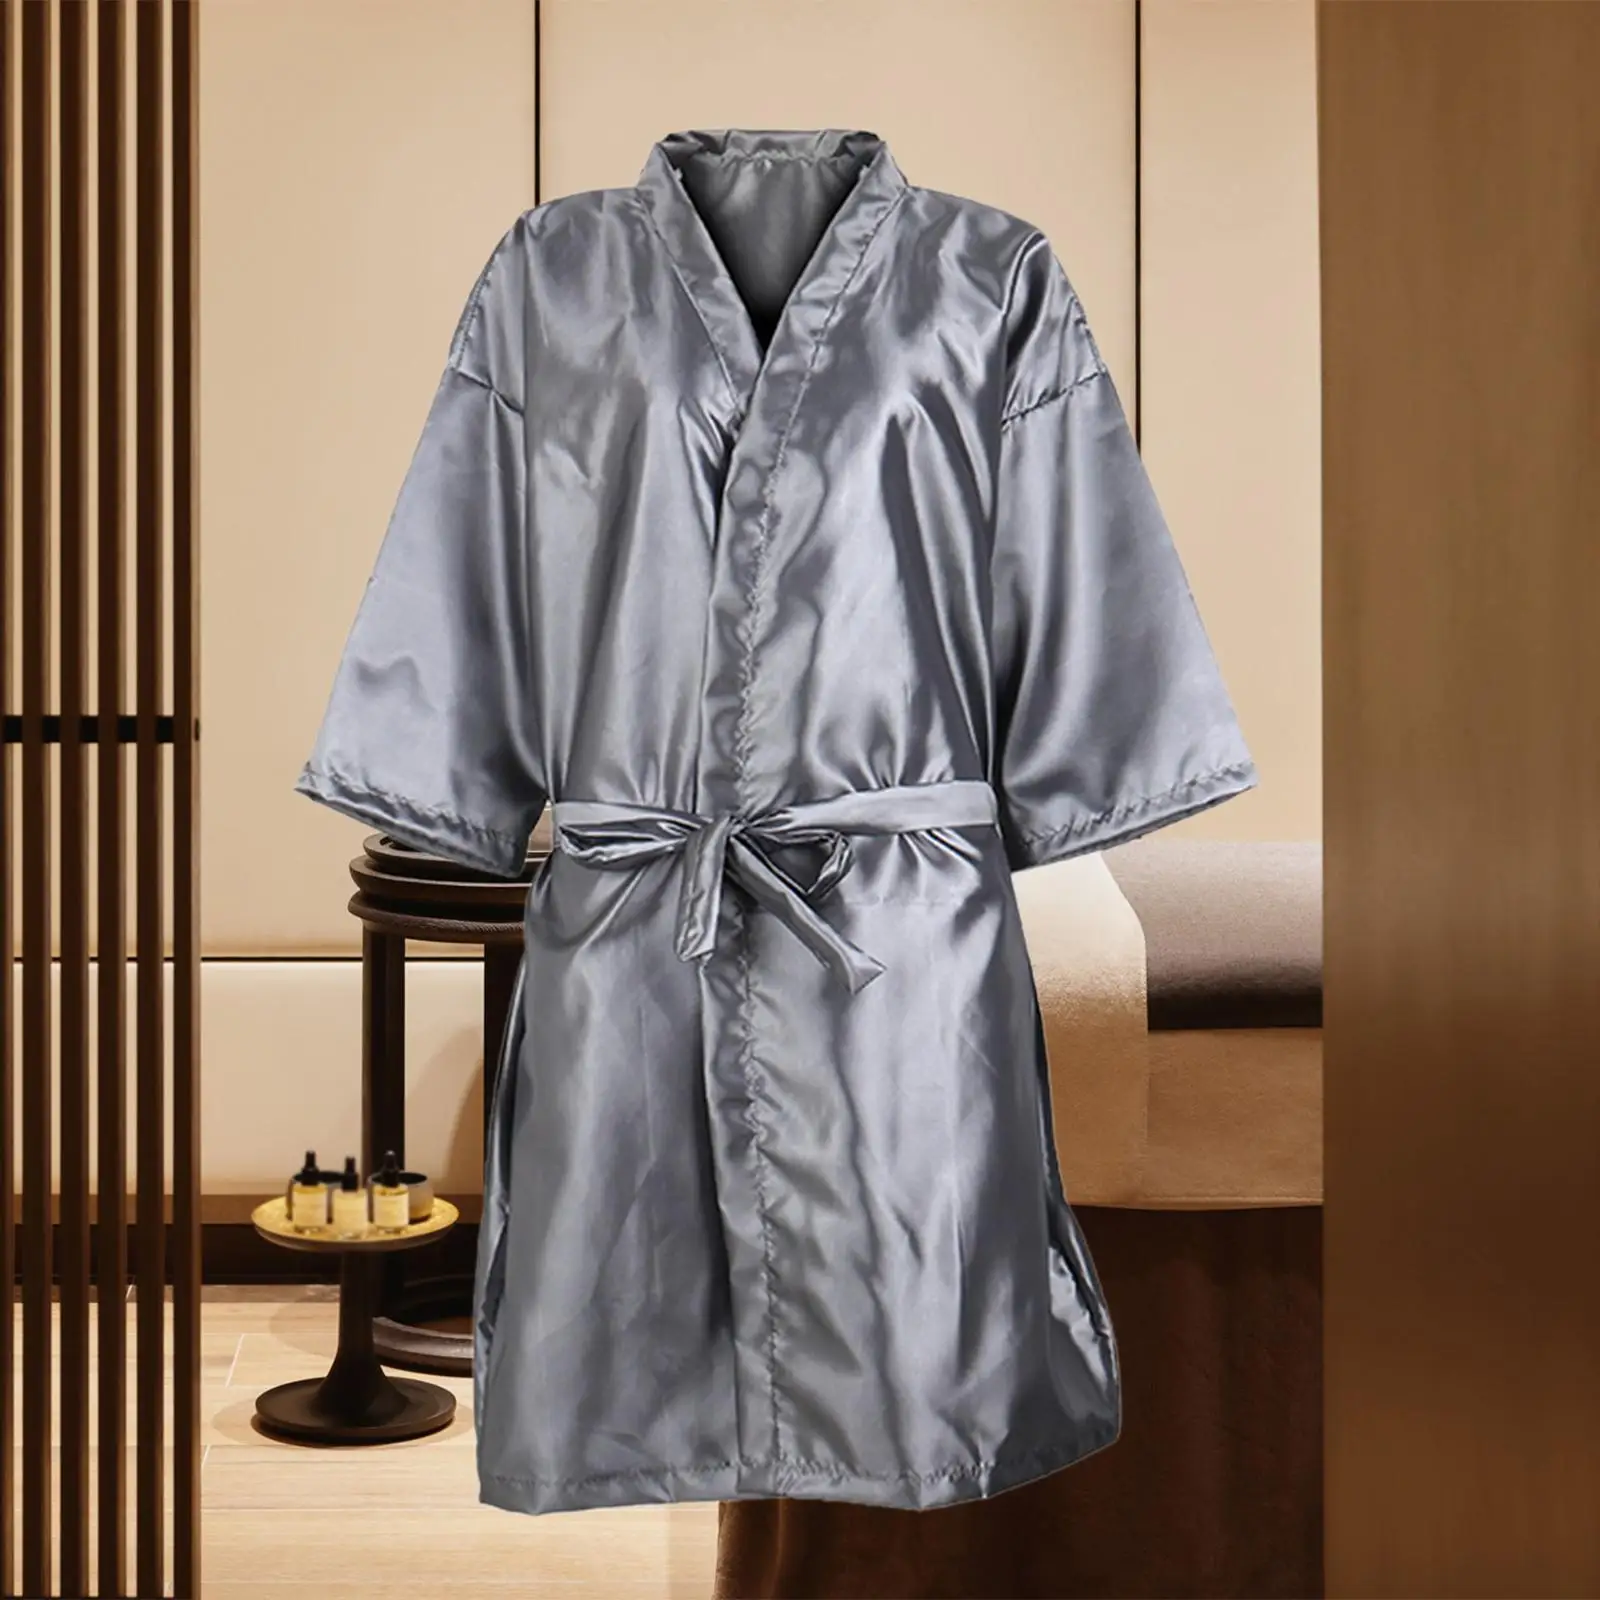 Salon Client Gown V Neckline Breathable Durable Clients Barber Sleepwear Casual Light Bathrobe for Beauty Salon SPA Cosmetology